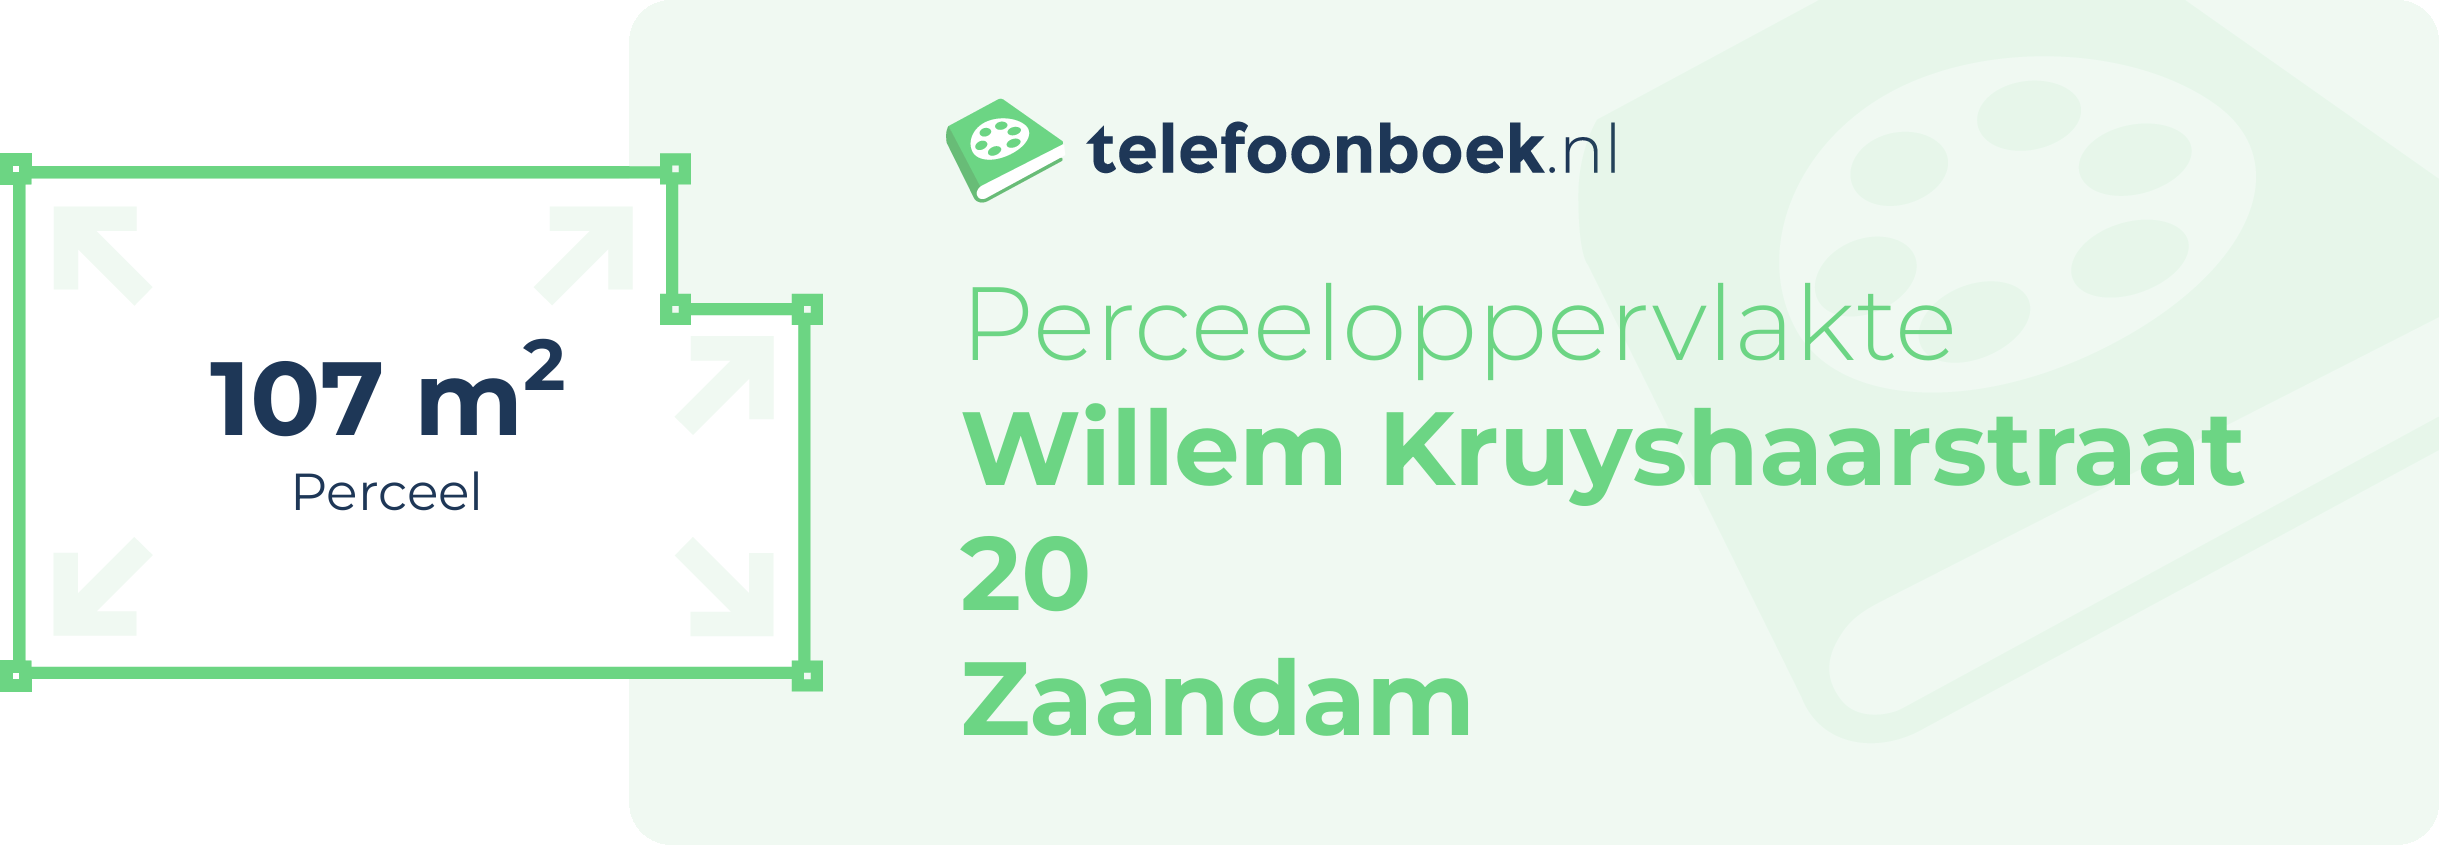 Perceeloppervlakte Willem Kruyshaarstraat 20 Zaandam